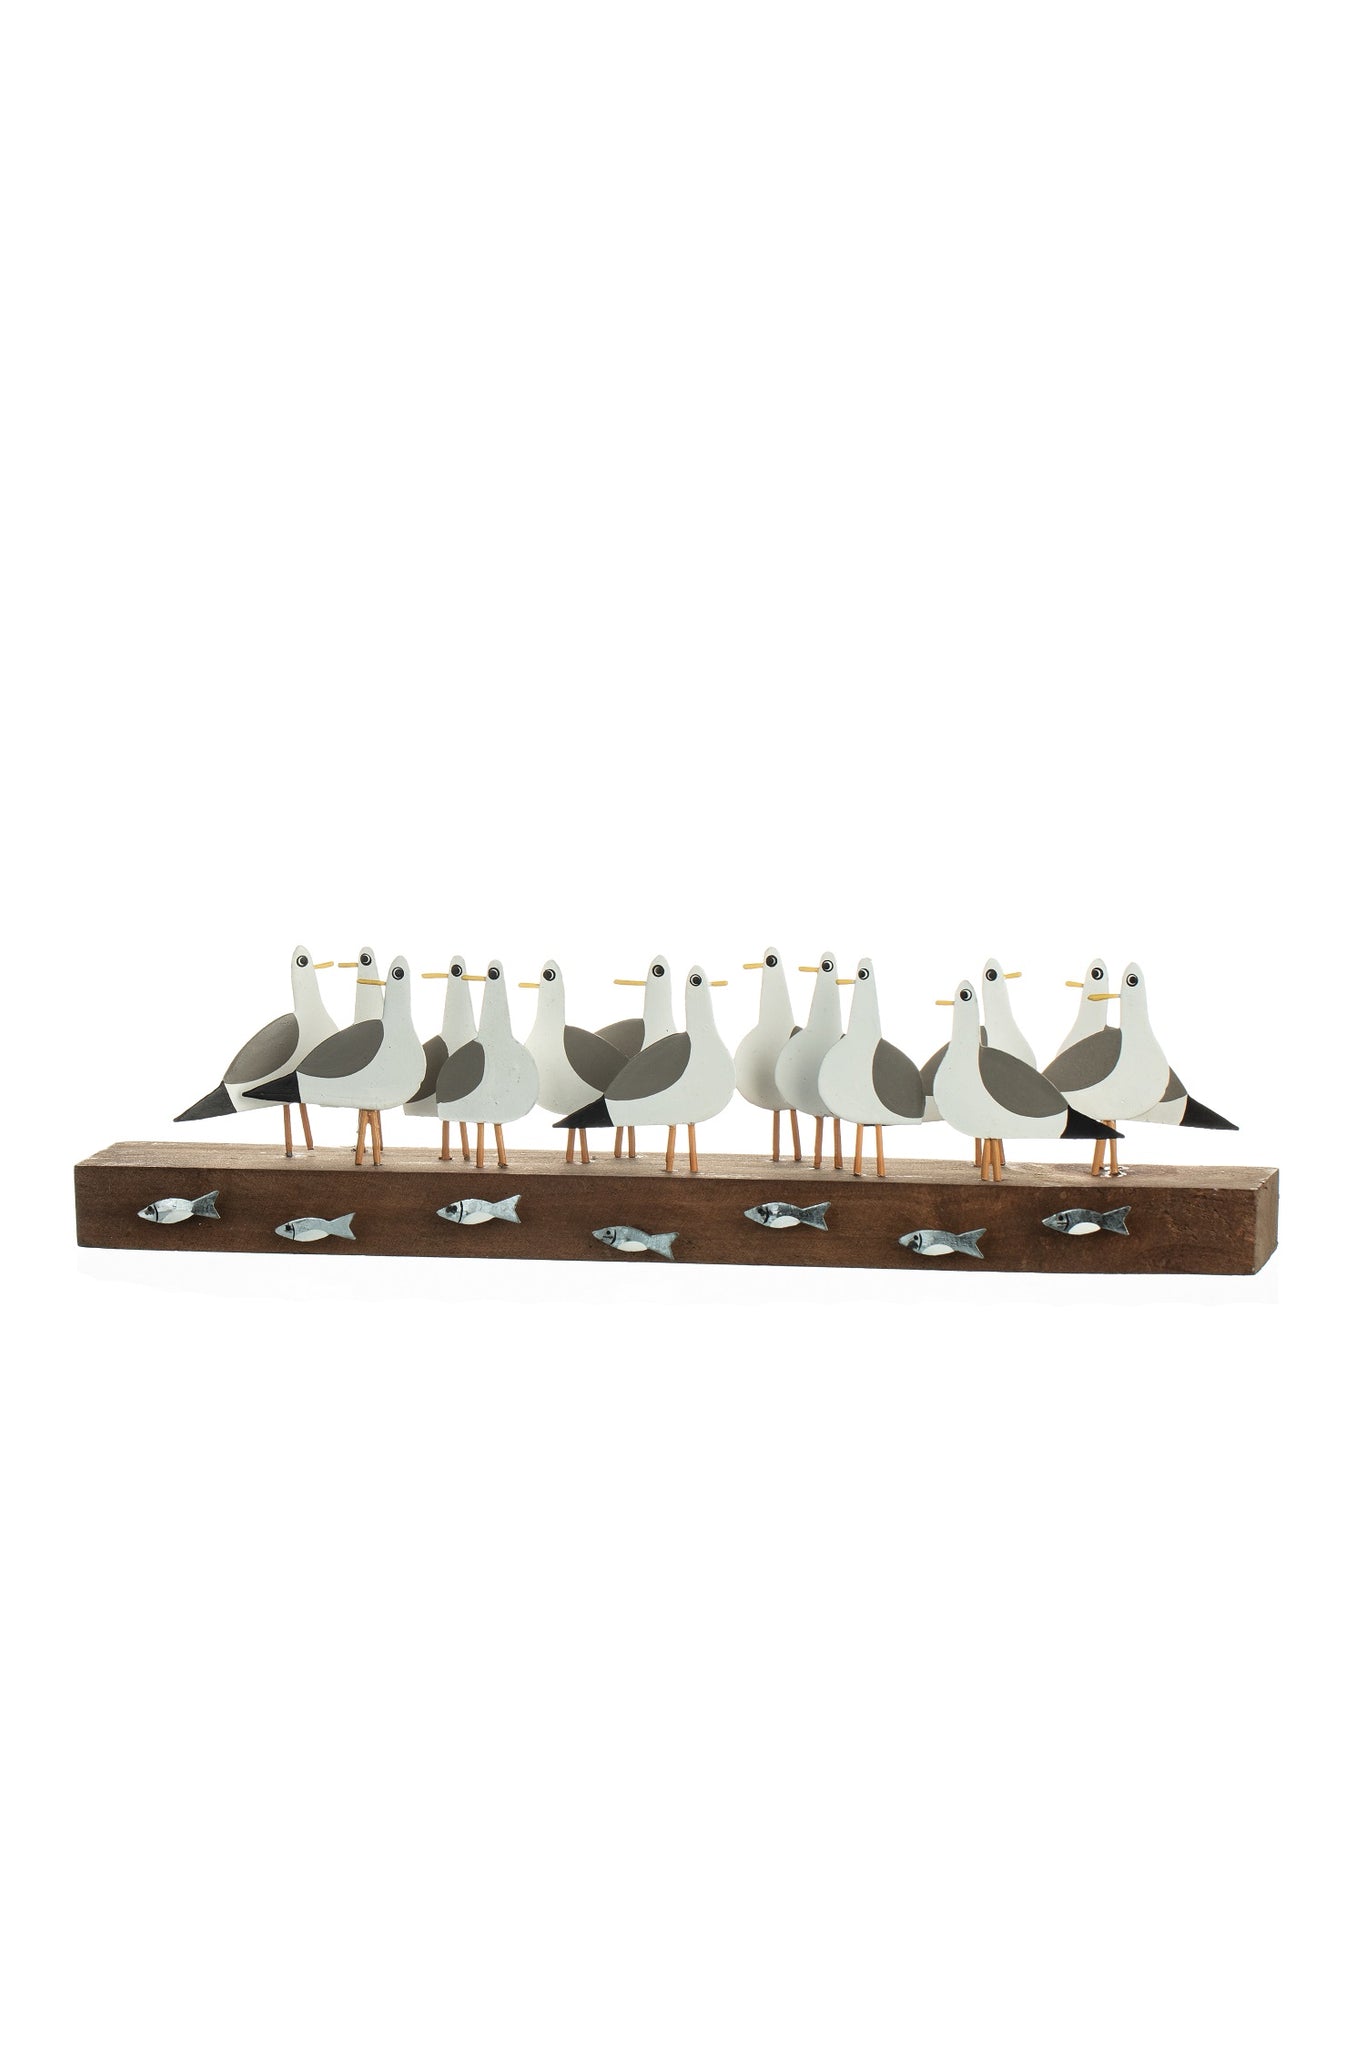 Row of Seagulls - Coastal decor item